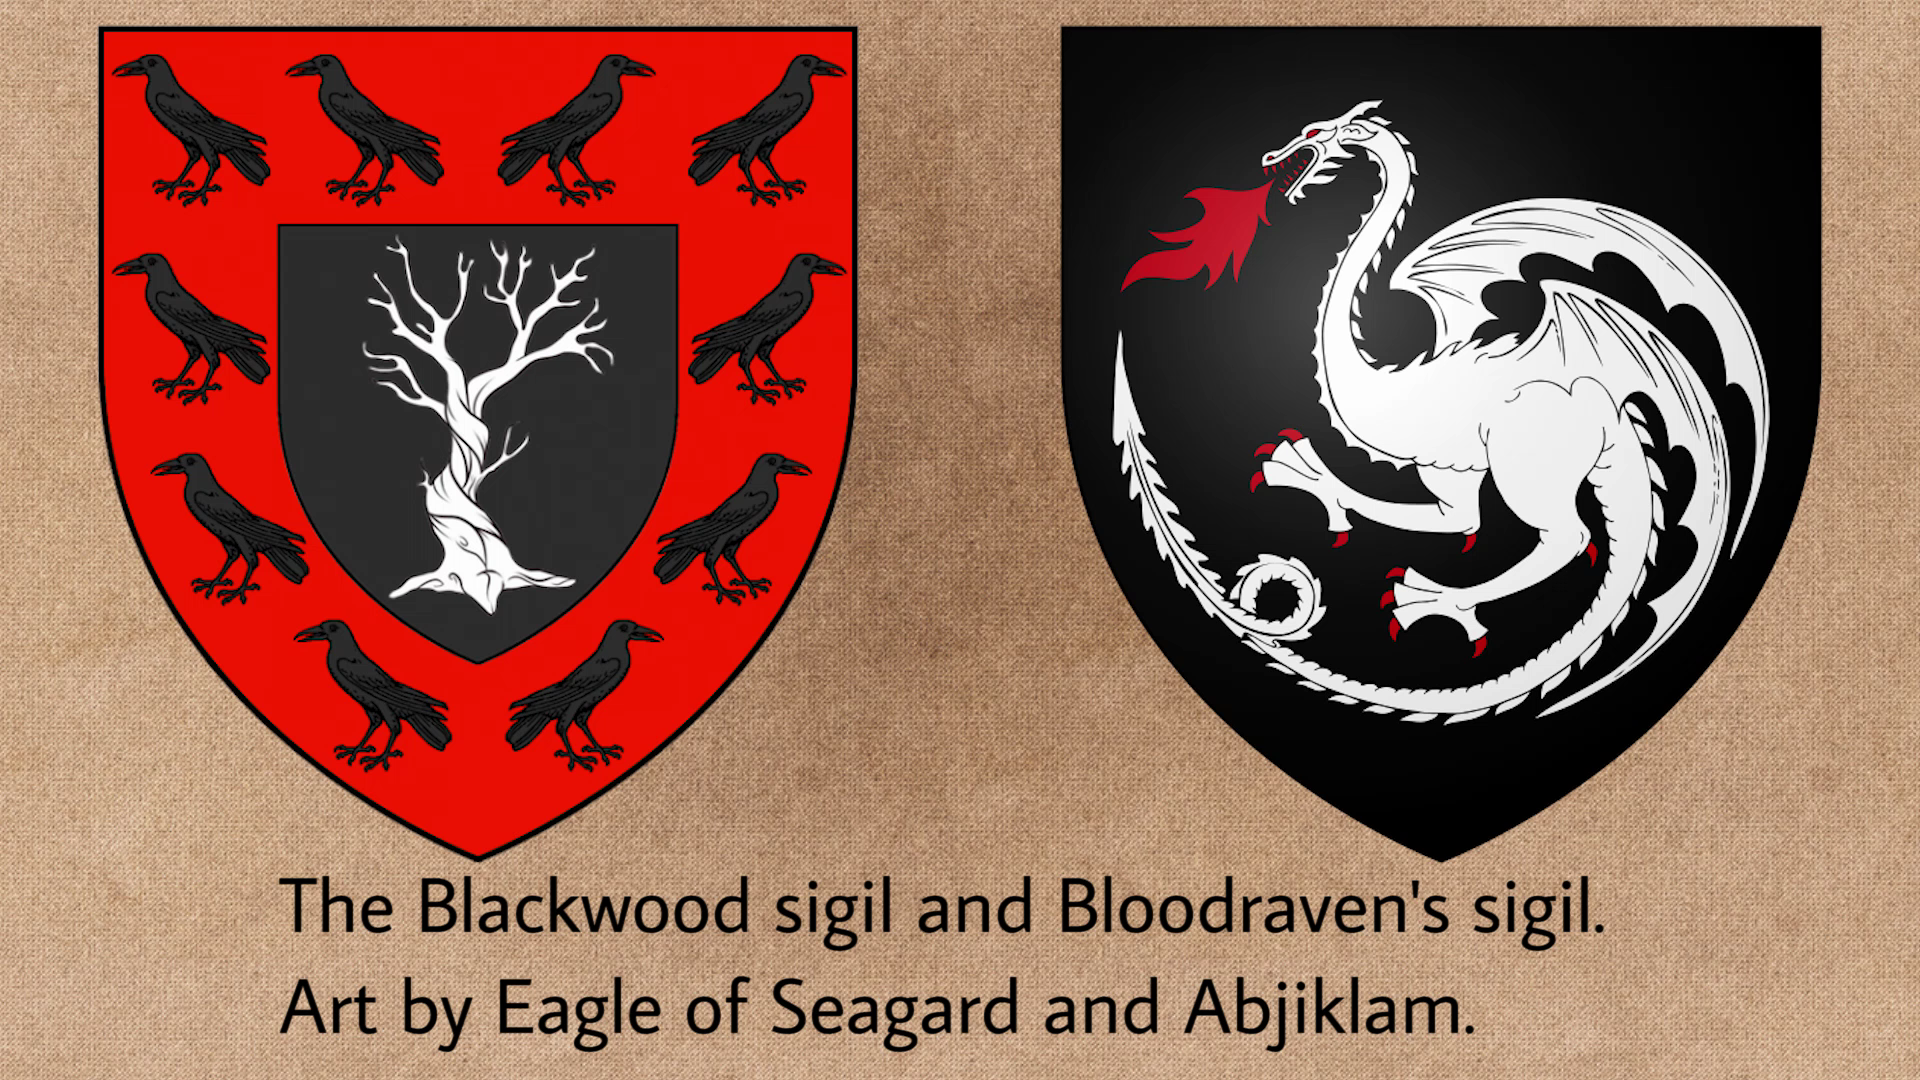 Abjiklam & Eagle of Seagard